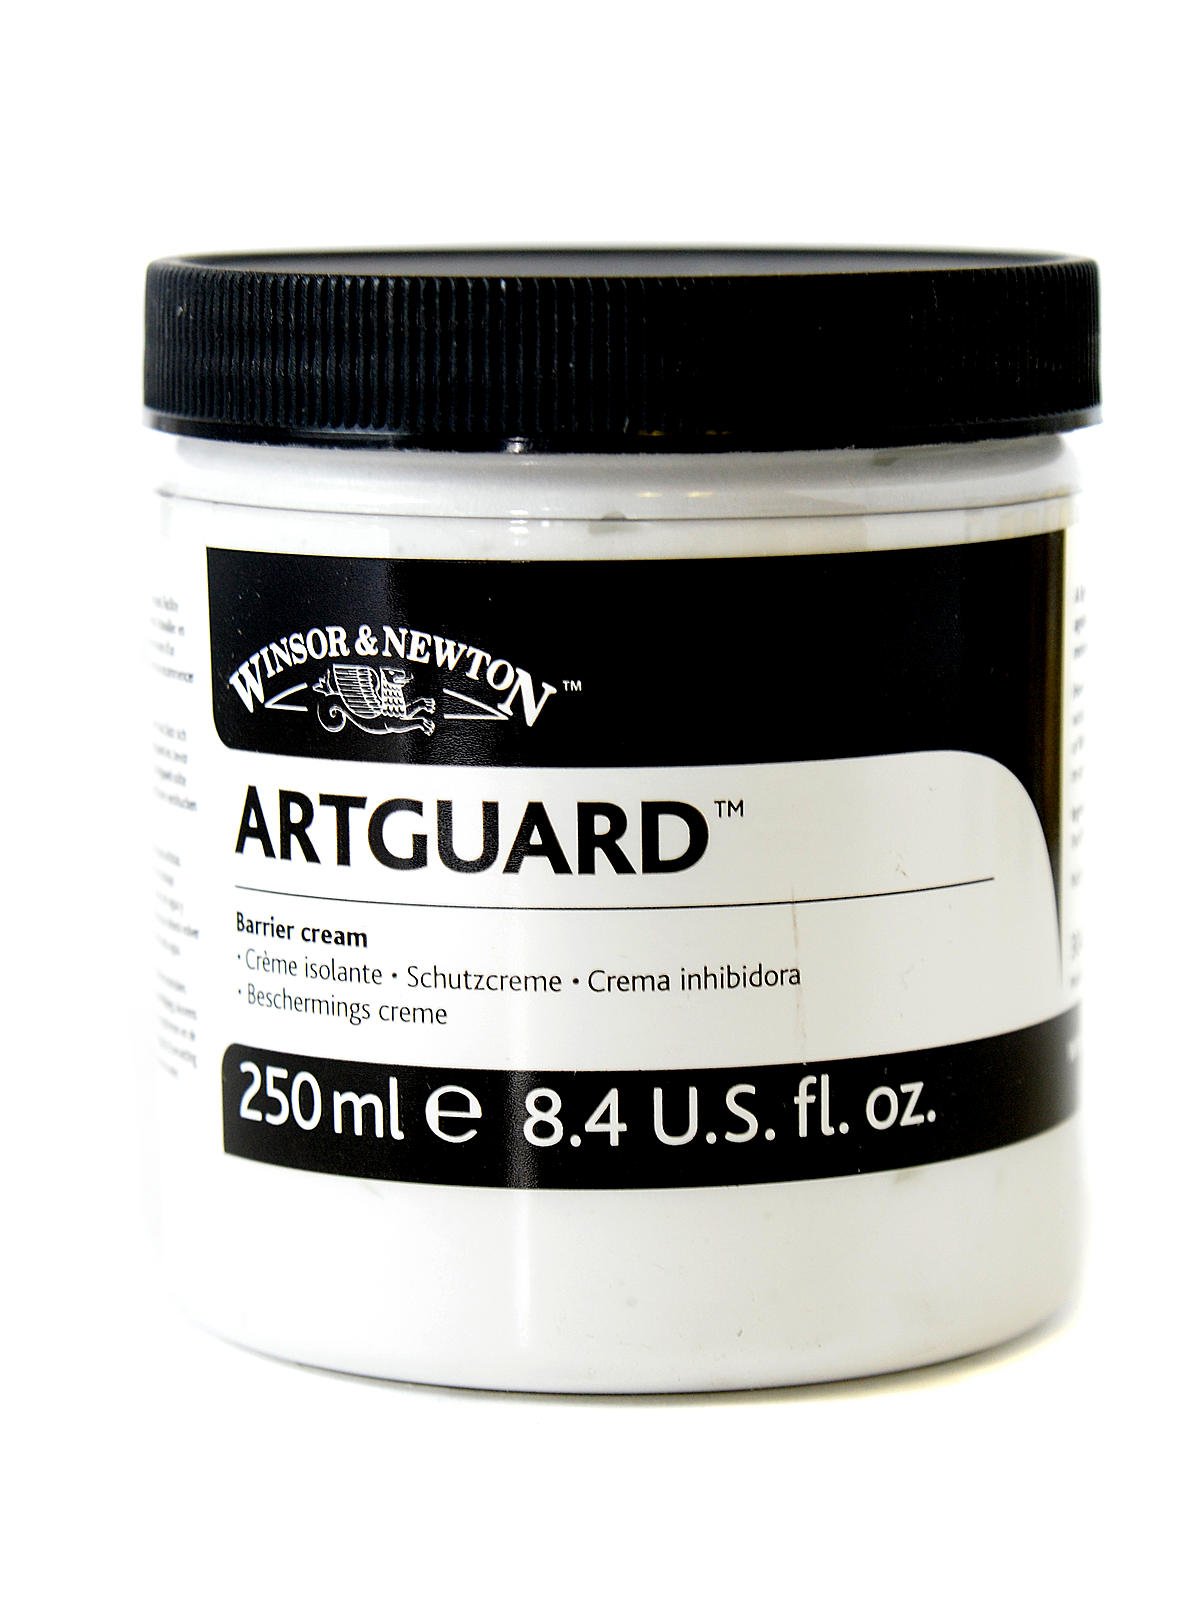 Winsor & Newton - Artguard Barrier Cream